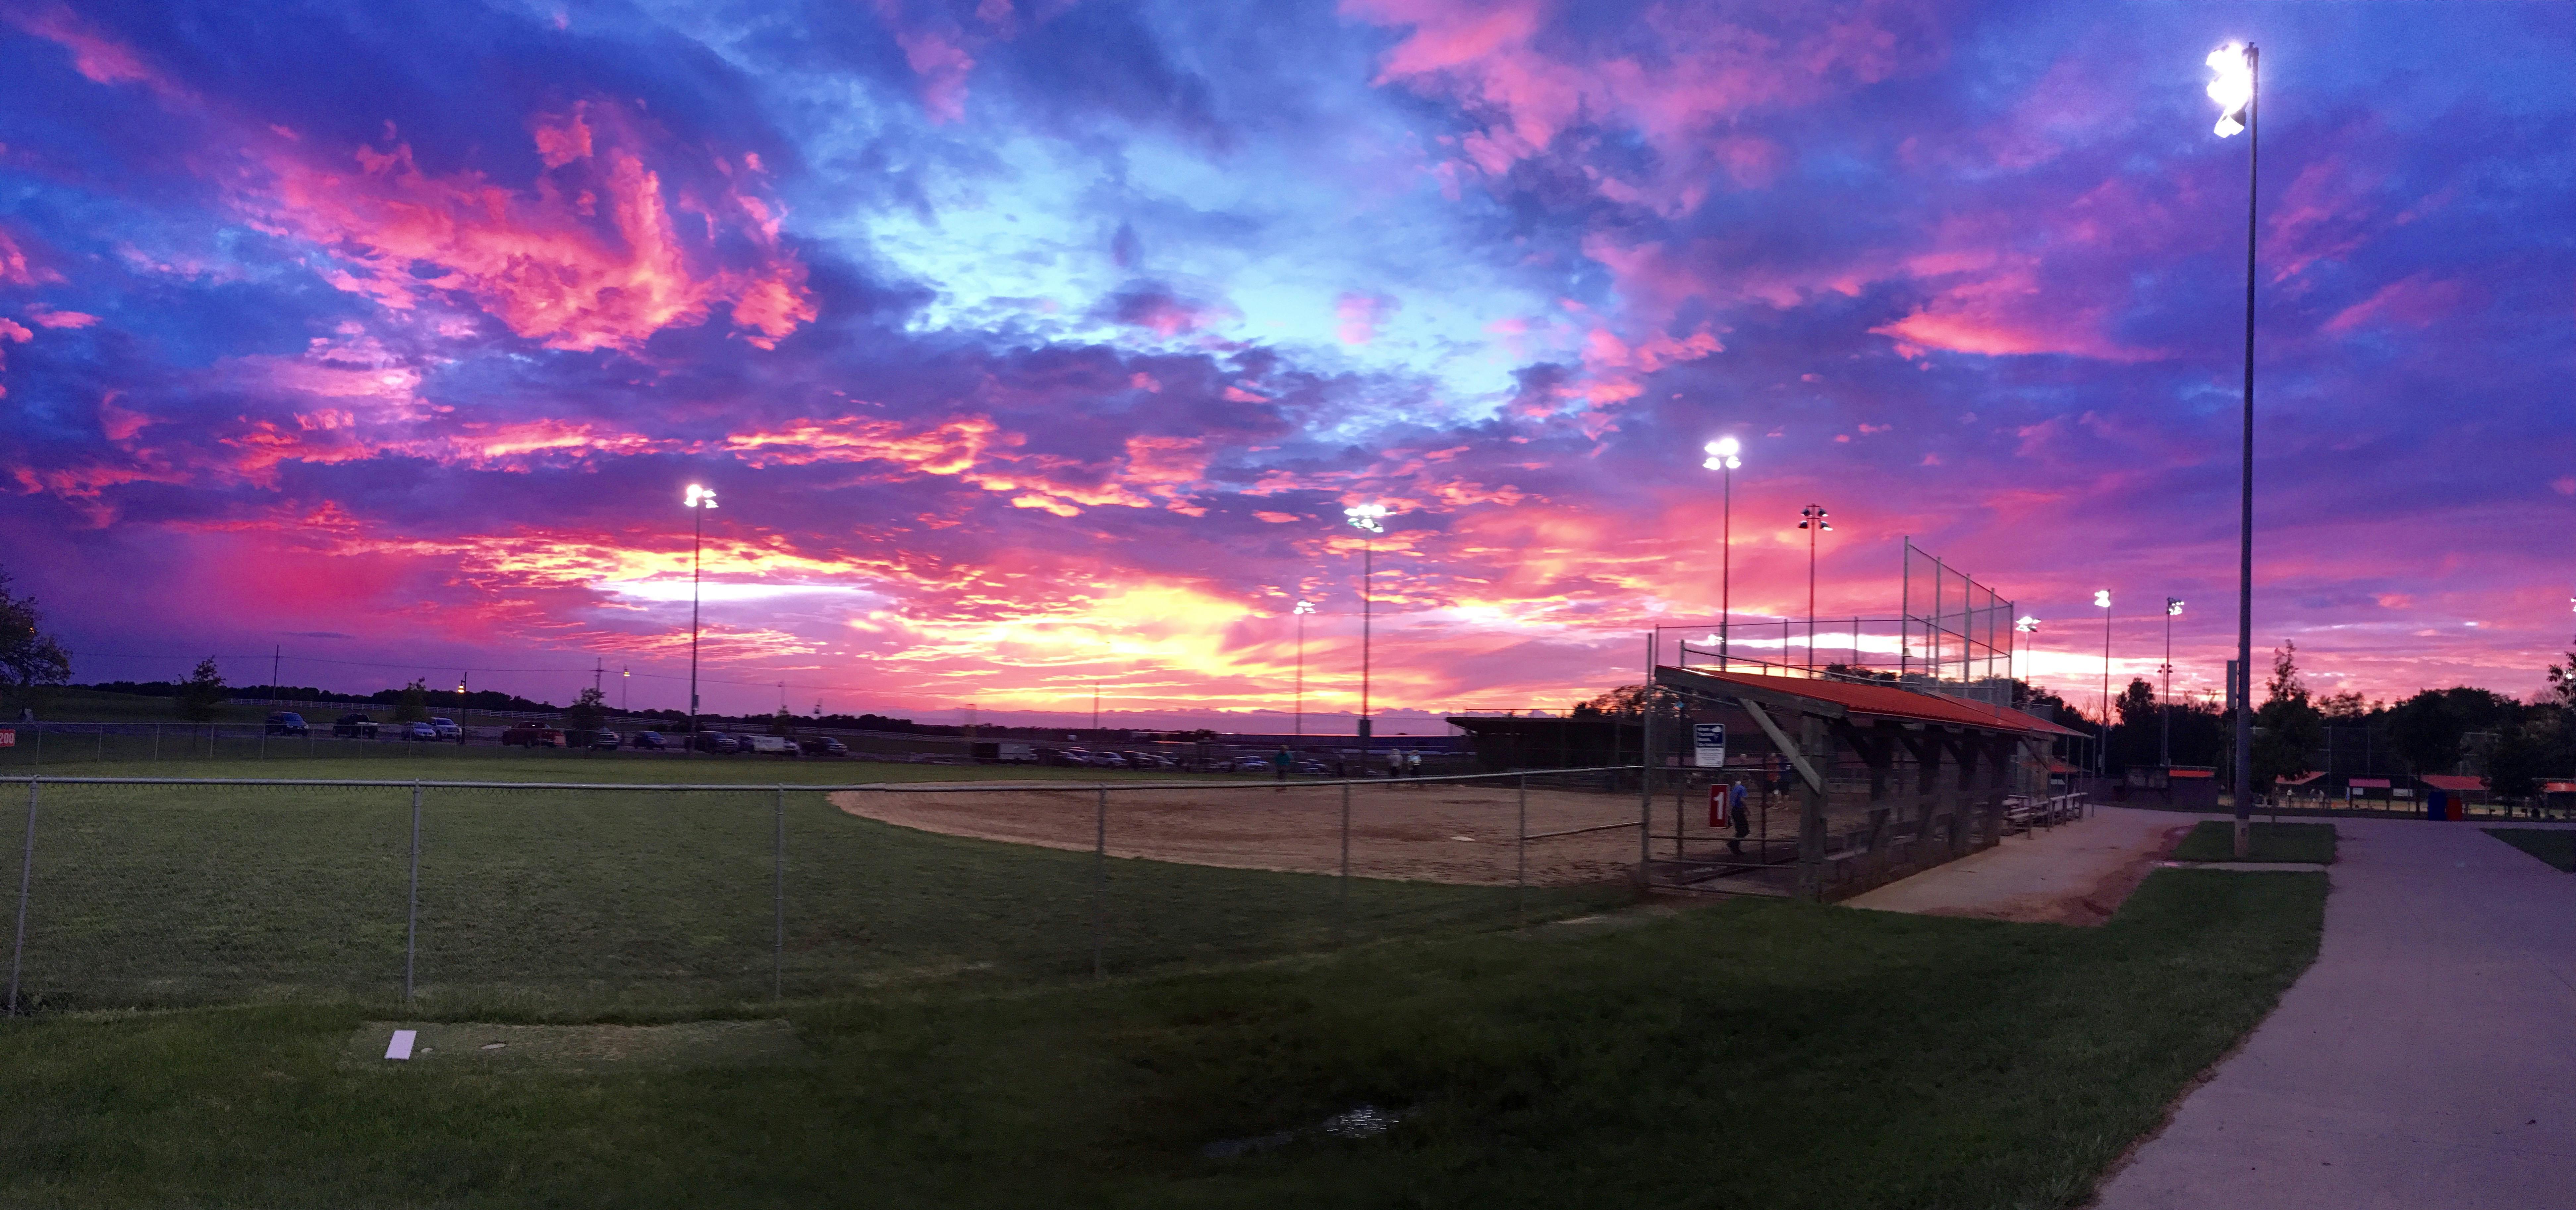 Sunset Over Baseball Field  Free Stock Photo-5311